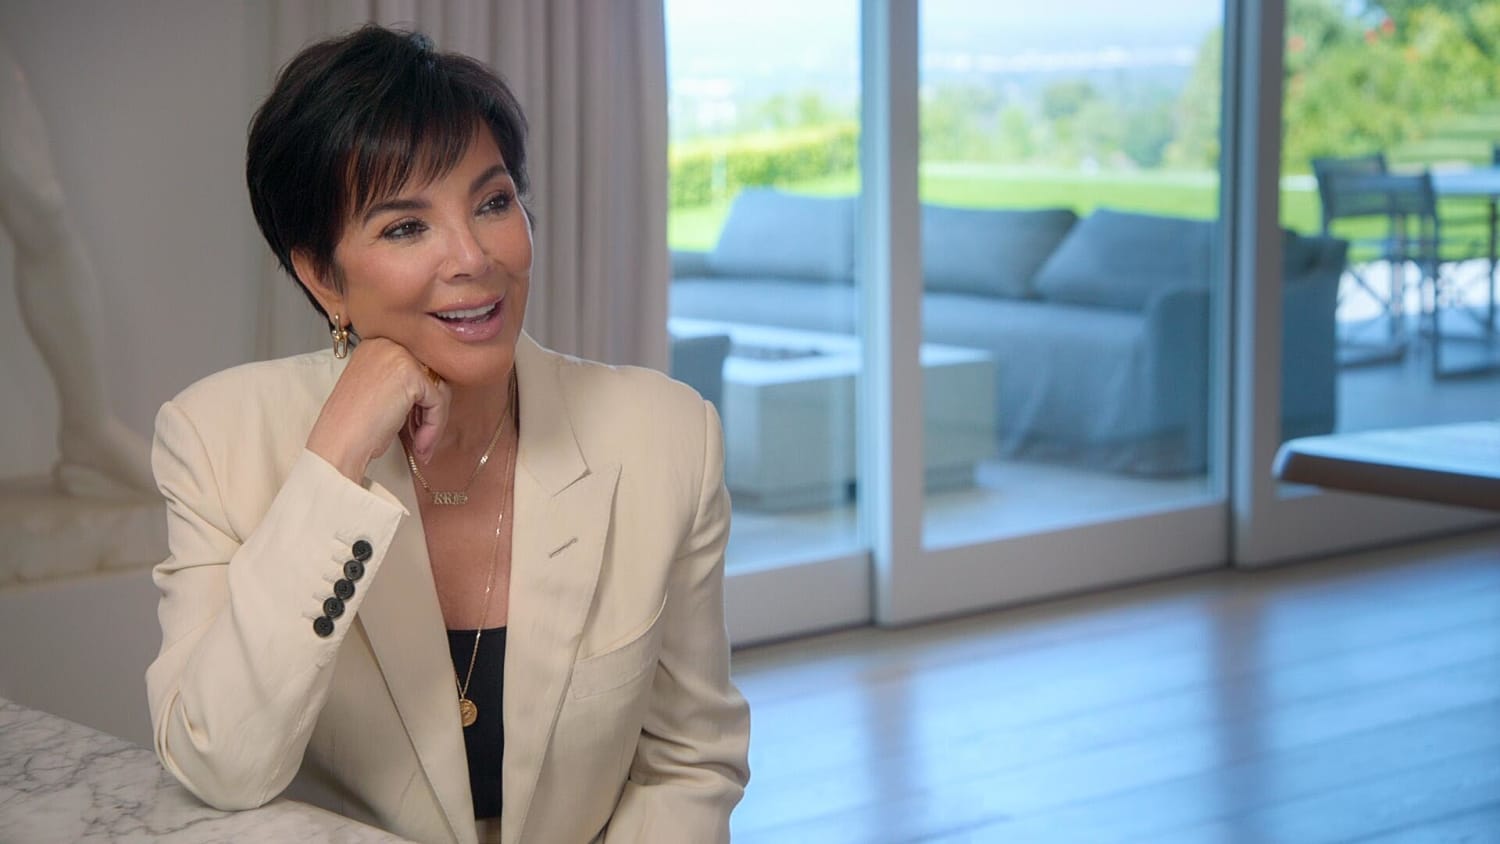 Kris Jenner says Rob Kardashian will be on next season of 'KUWTK